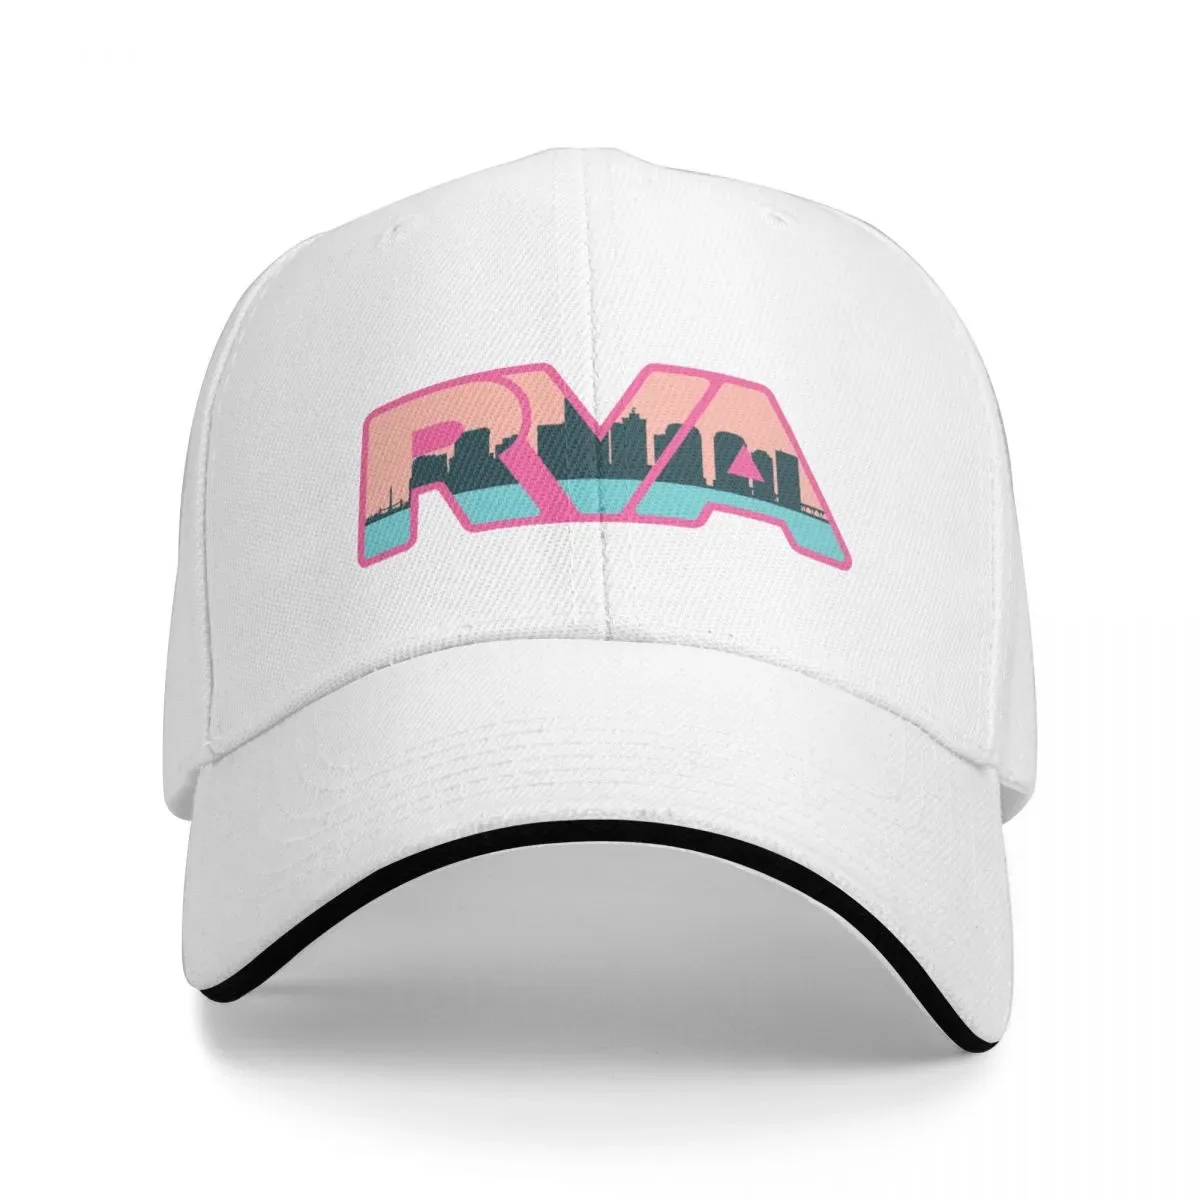 

New RVA Richmond VA Logo Cap Baseball Cap baseball cap |-f-| bucket hat baseball cap golf hat men Women's